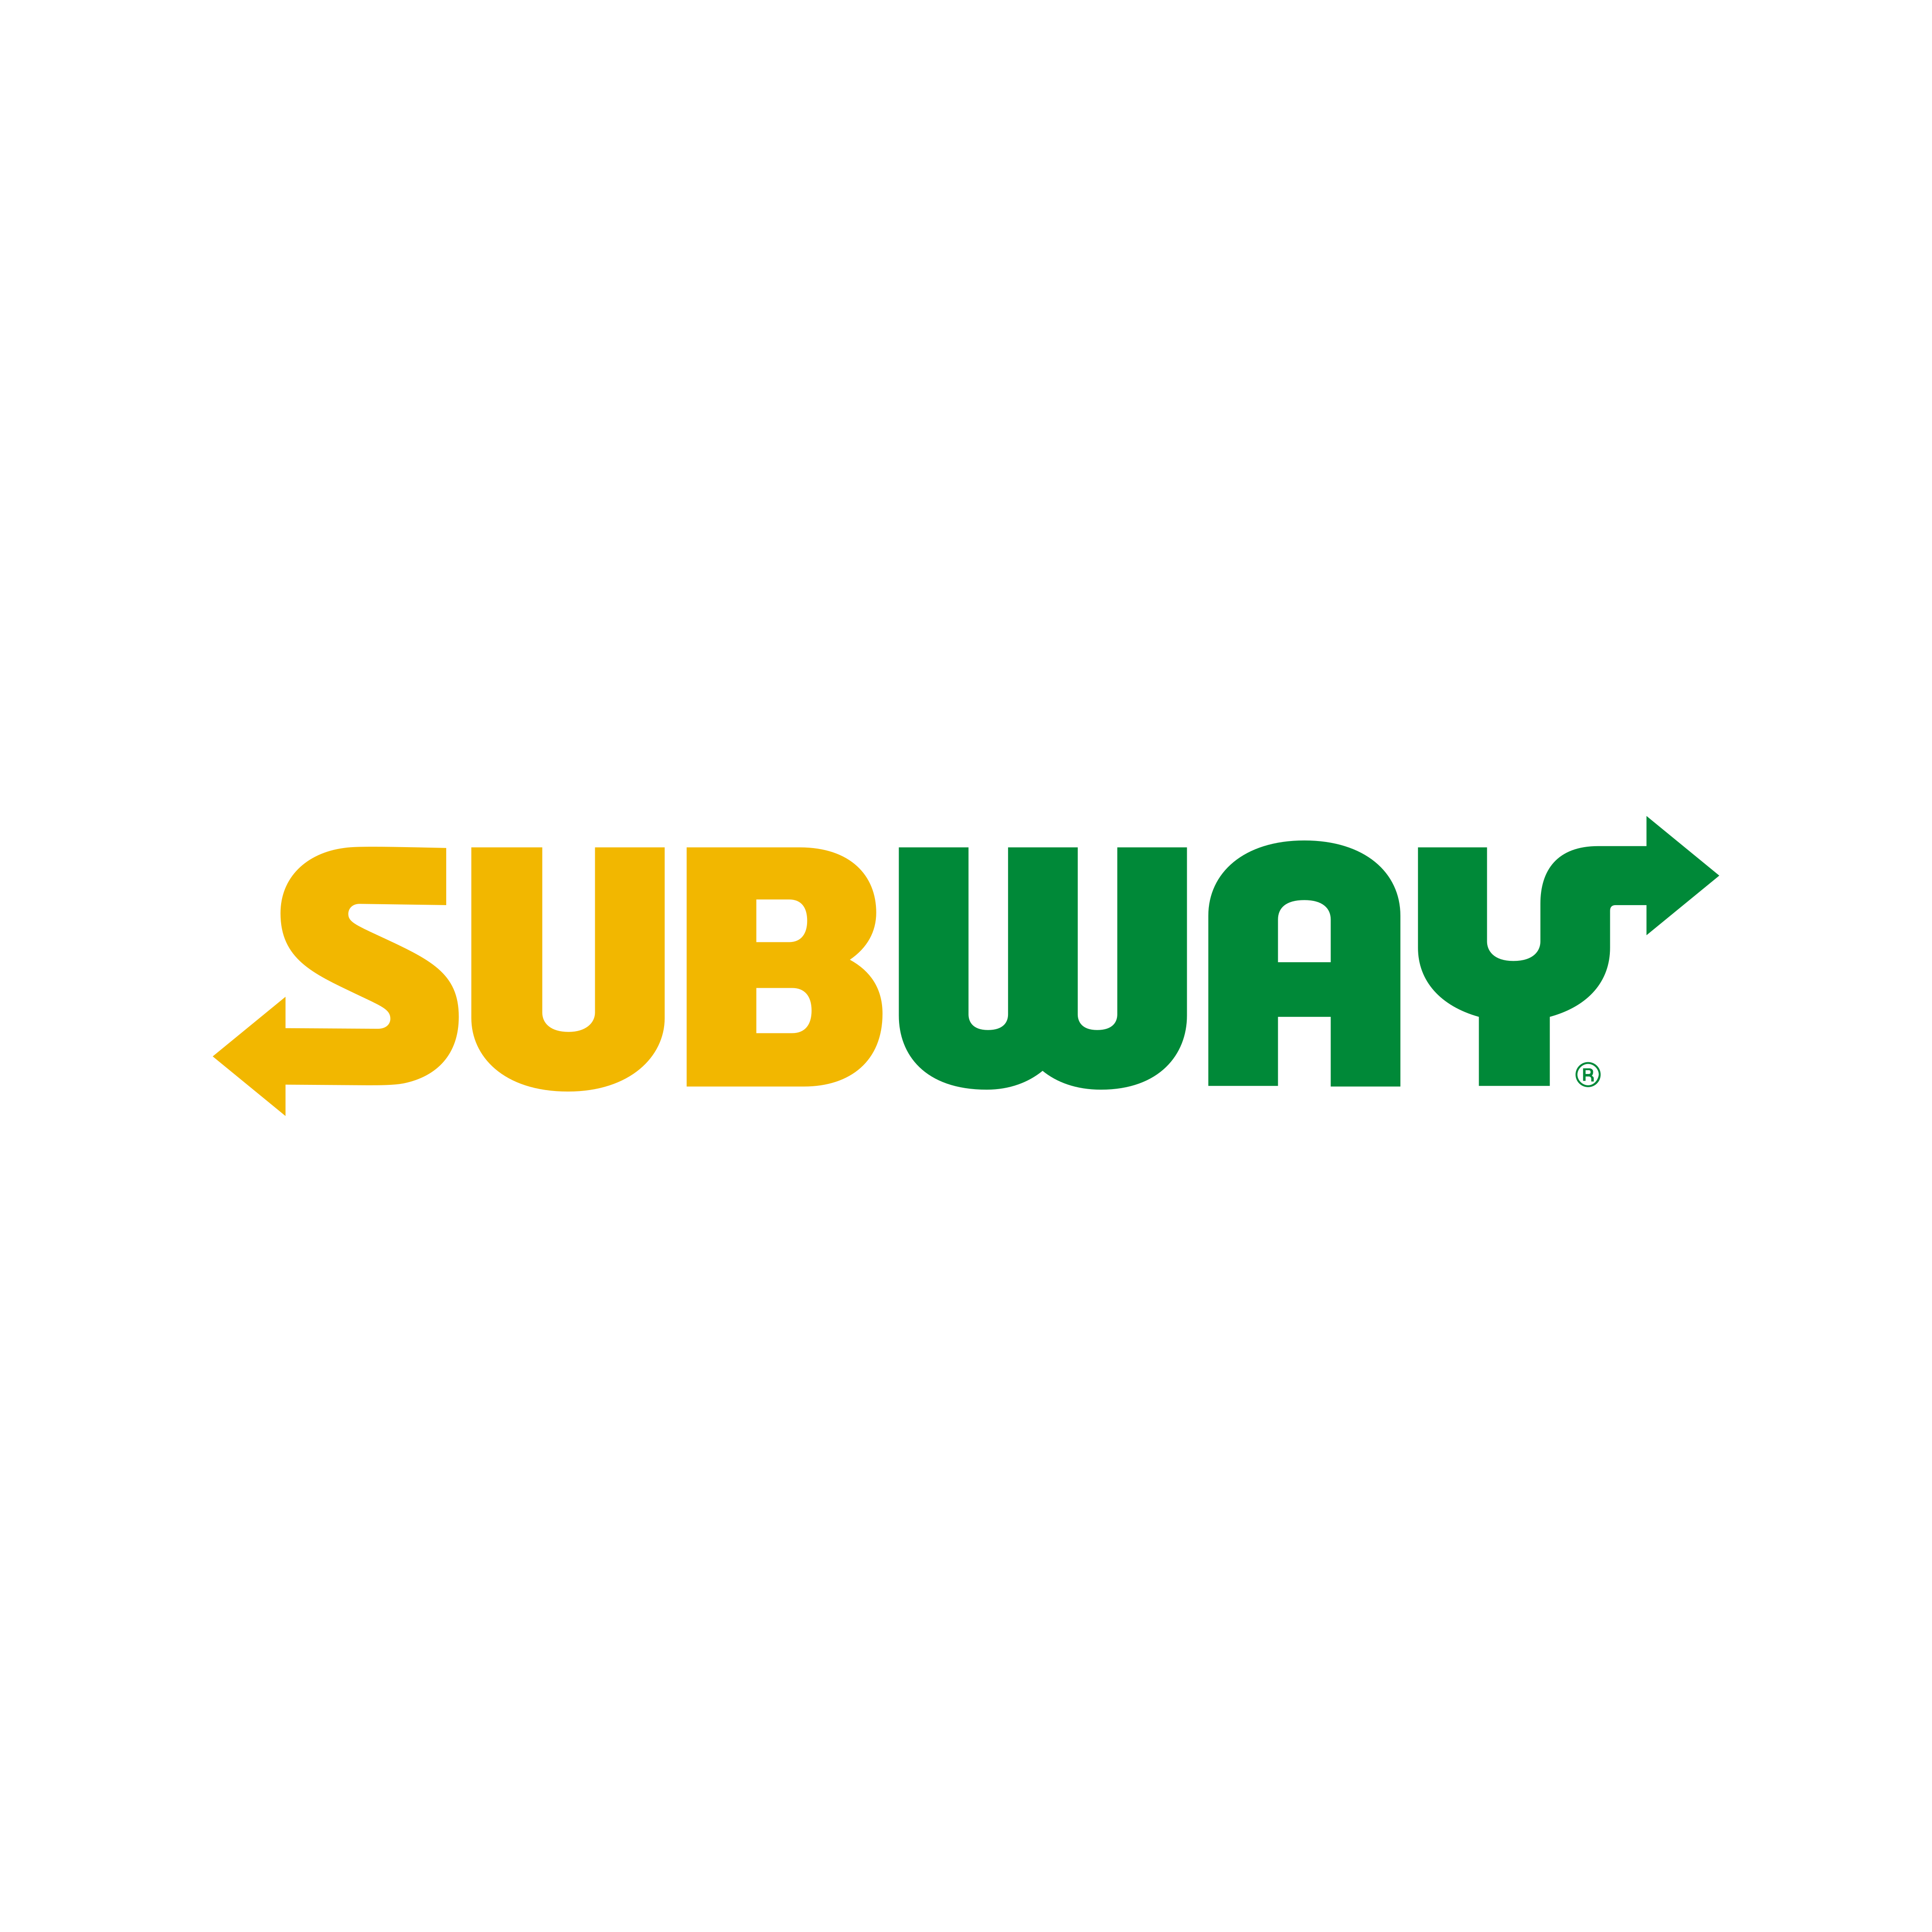 subway logo 0 - Subway Logo